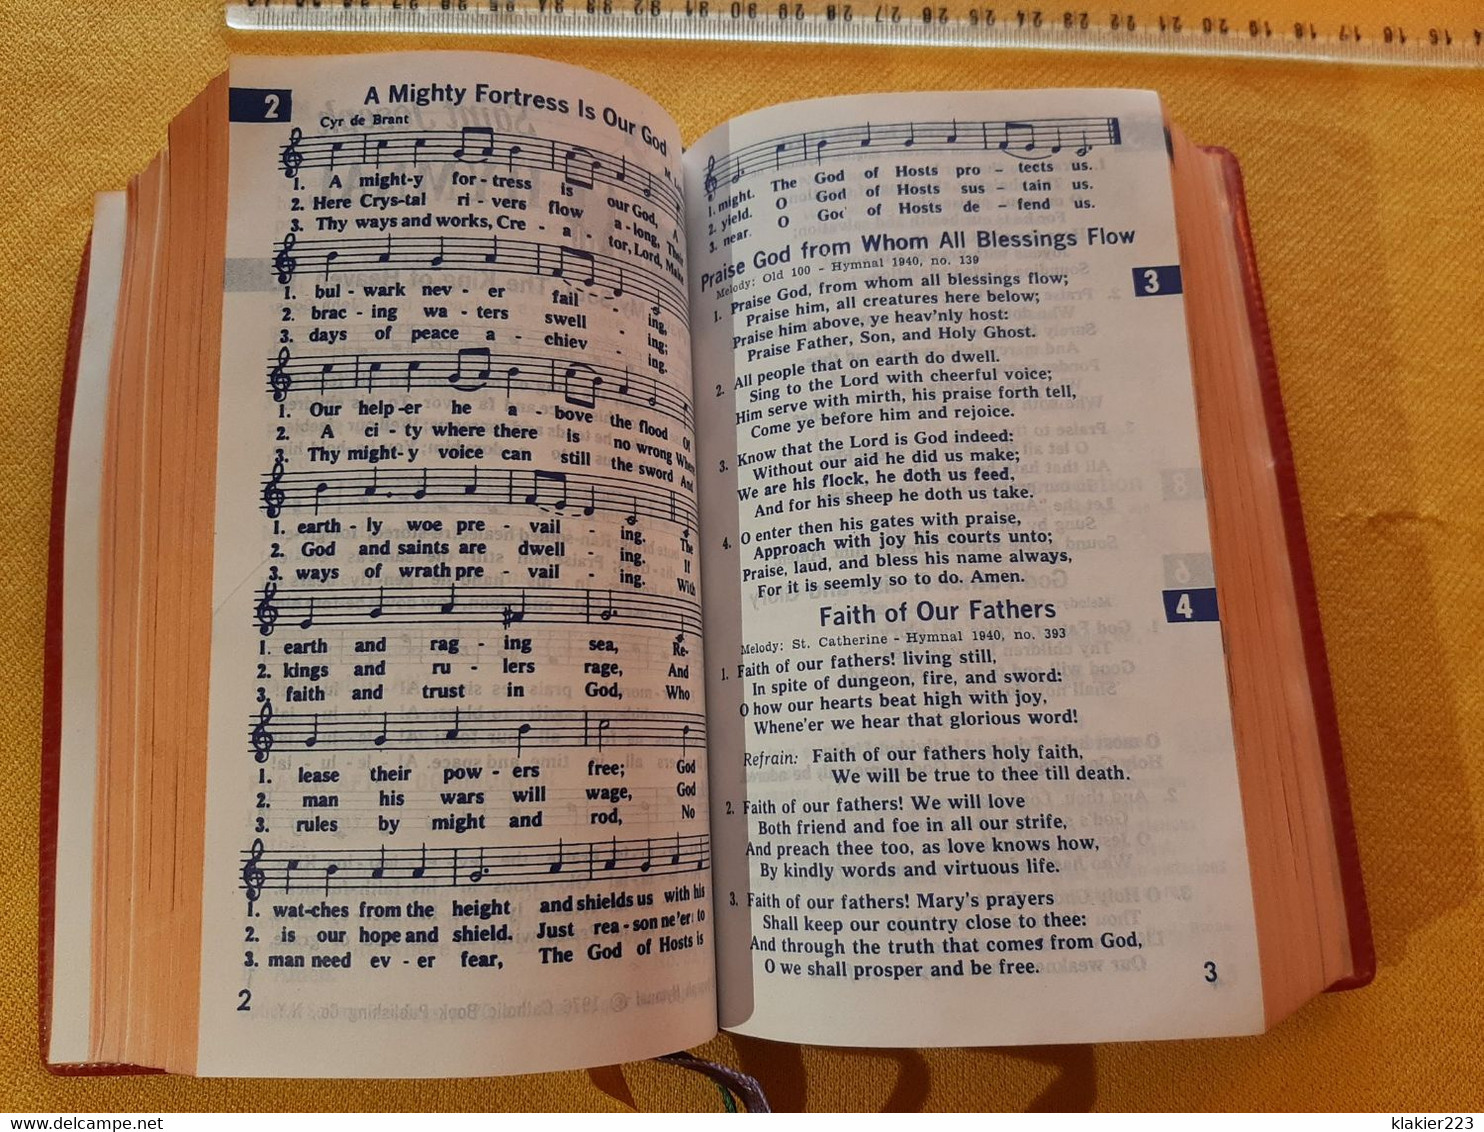 New... Saint Joseph Sunday Missal And Hymnal - Complete Edition - Bijbel, Christendom